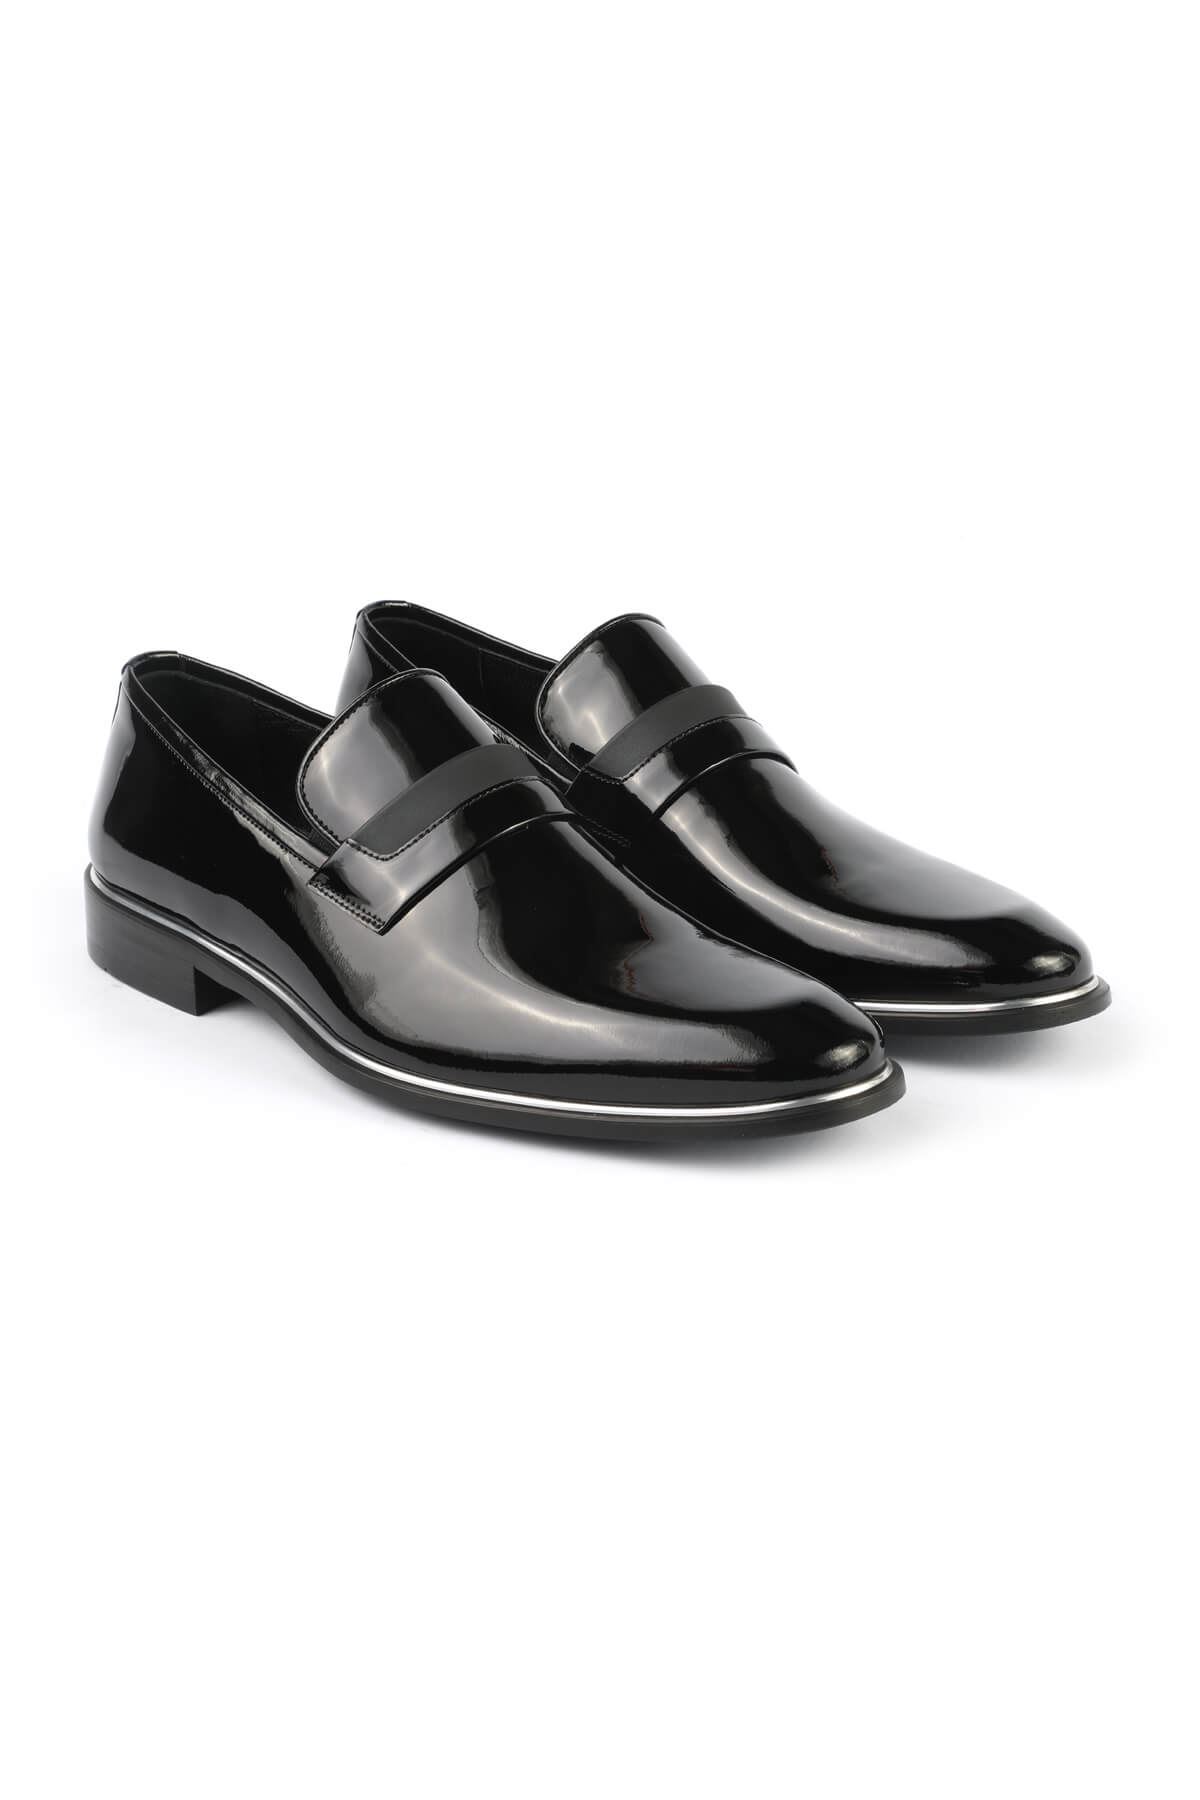 Libero 2602 Black Classic Shoes